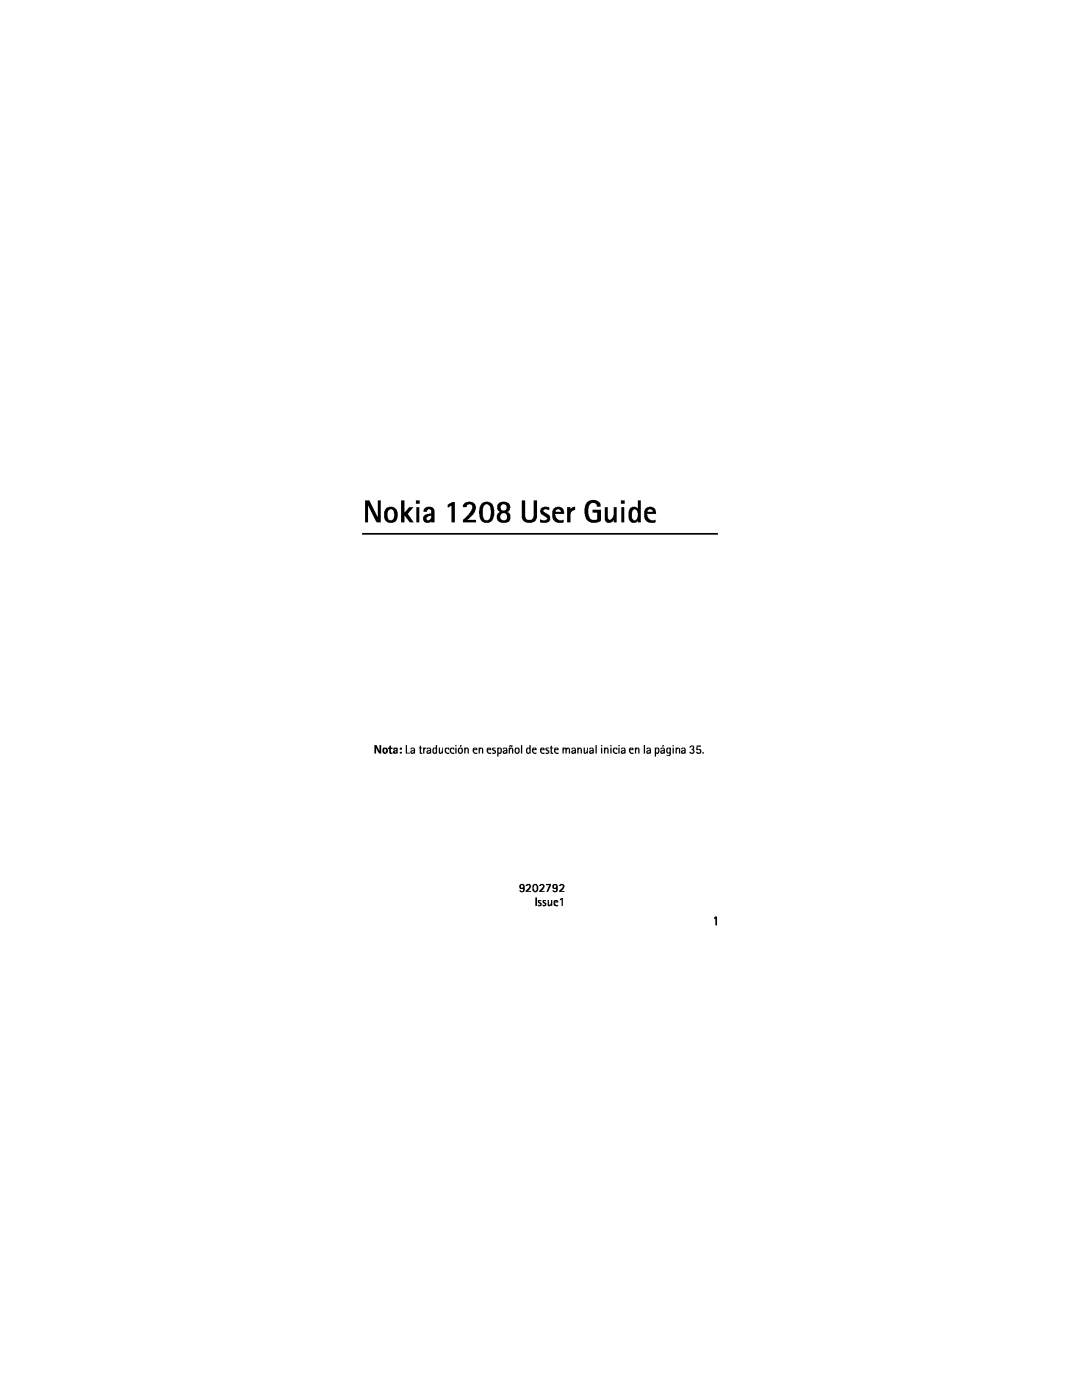 Nokia manual Nokia 1208 User Guide, Issue1 